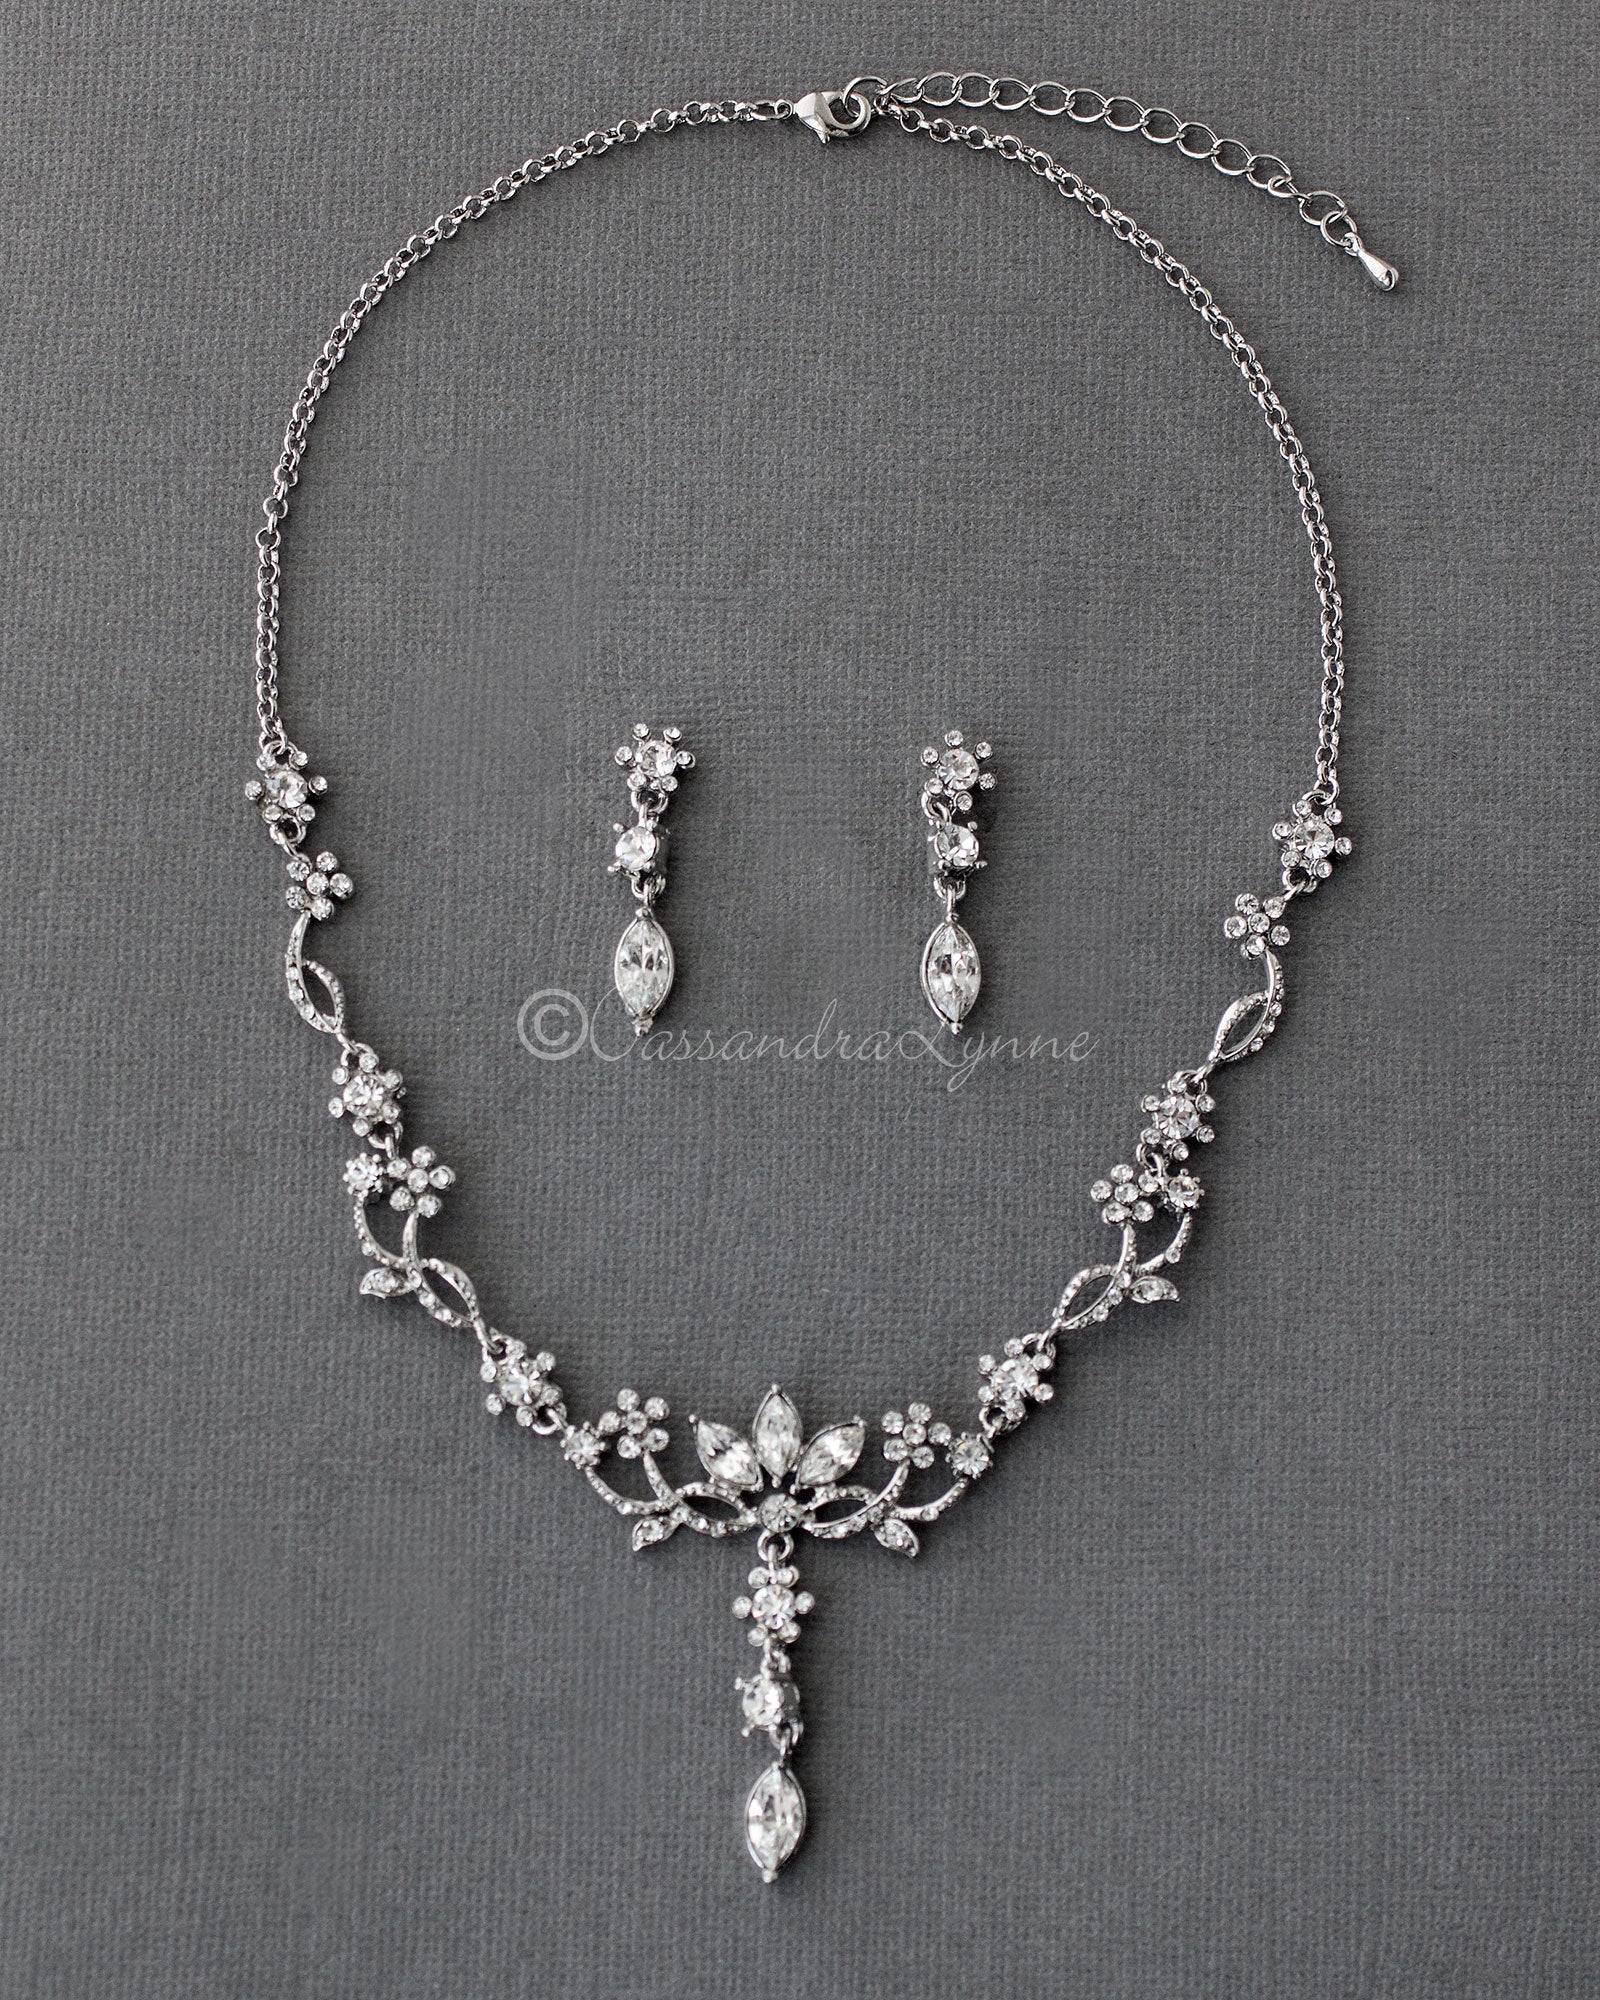 Antique Silver Flower Vine Necklace Set - Cassandra Lynne